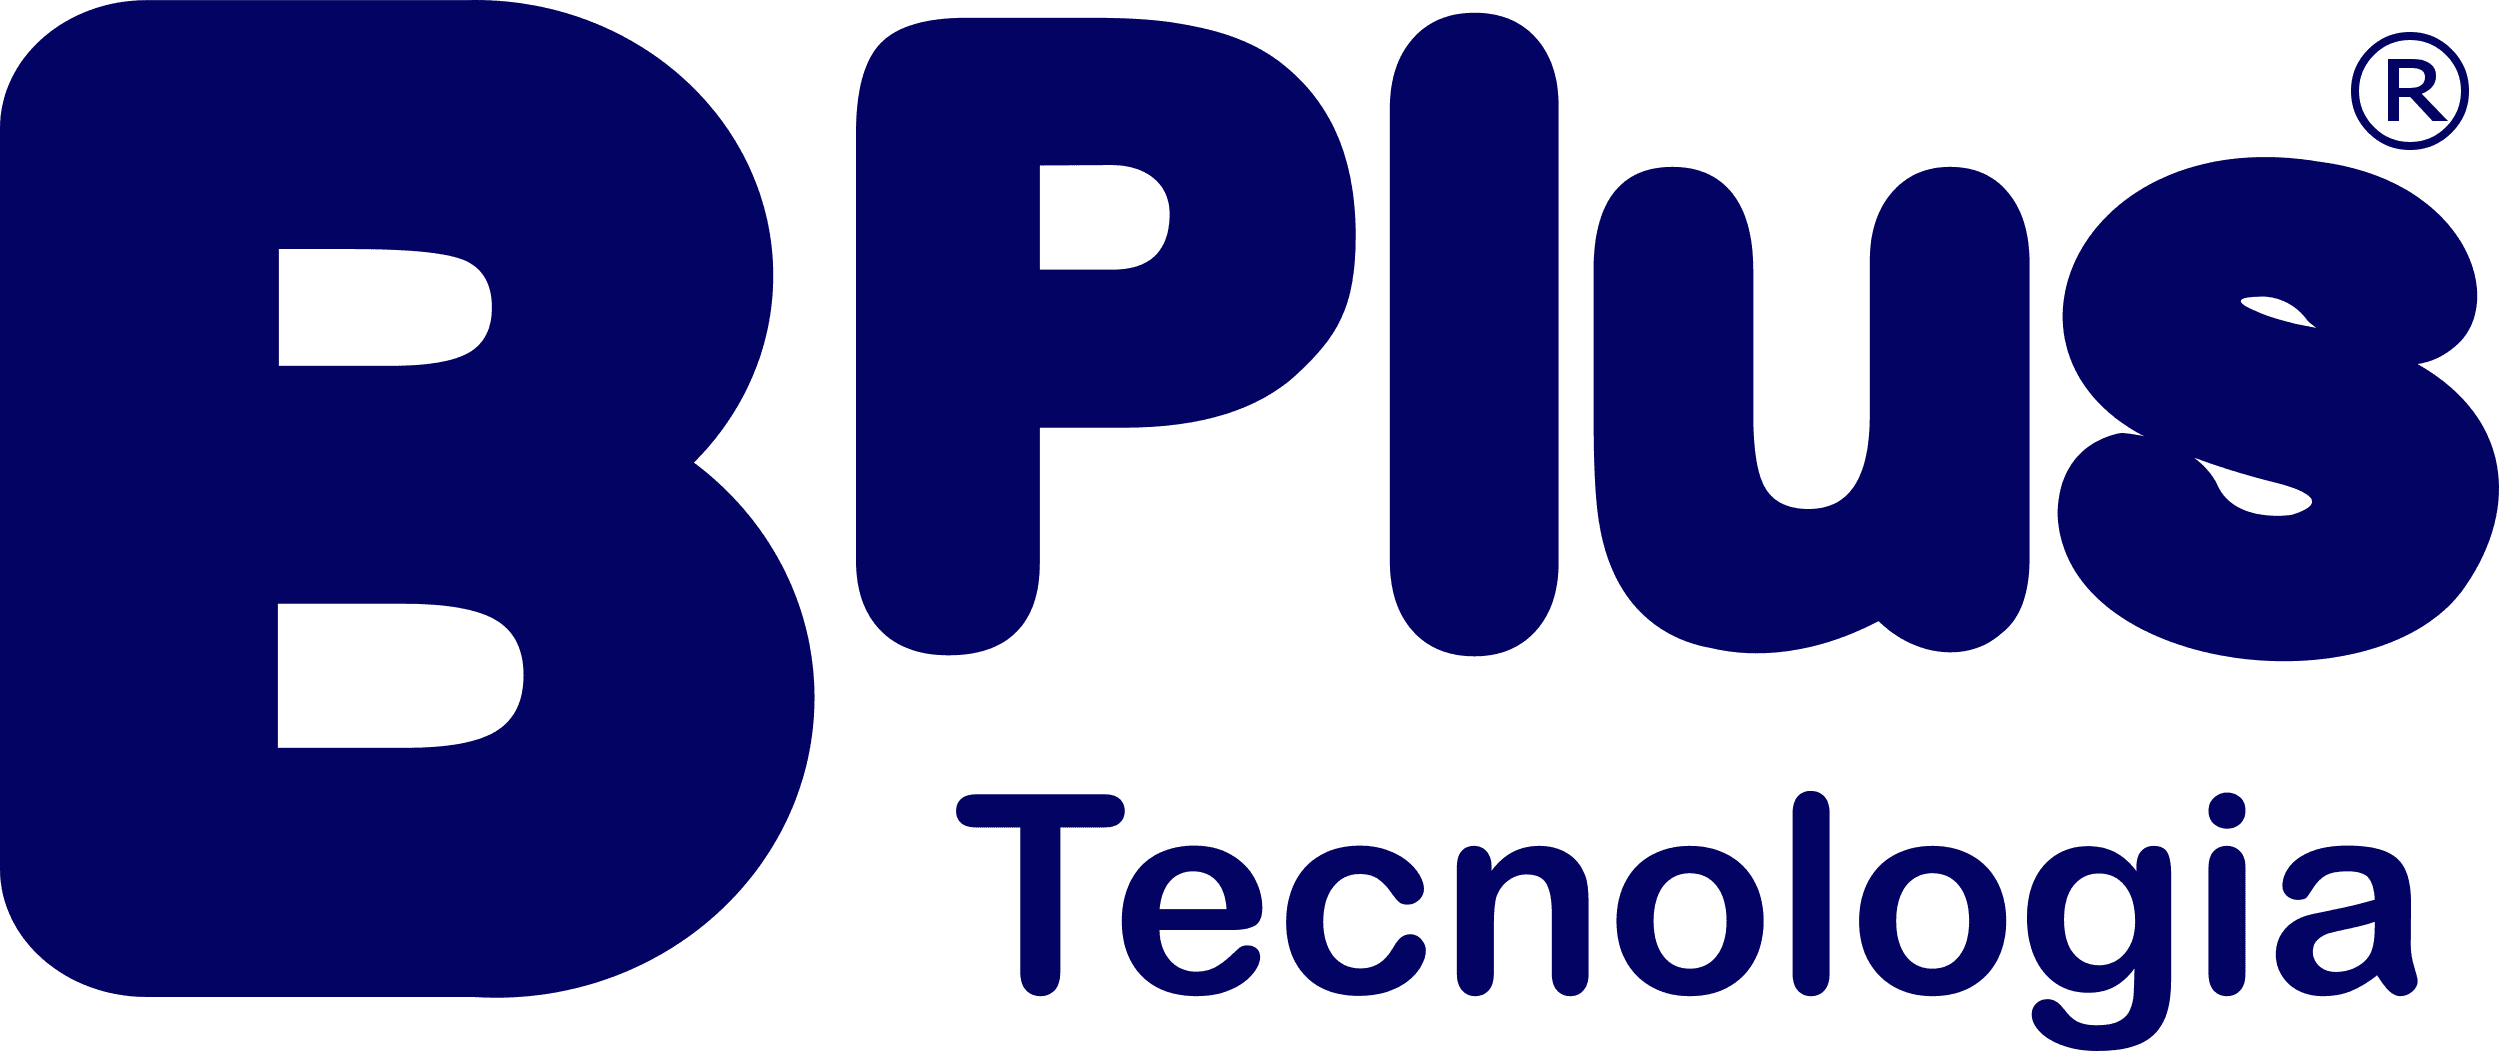 BPlus logo